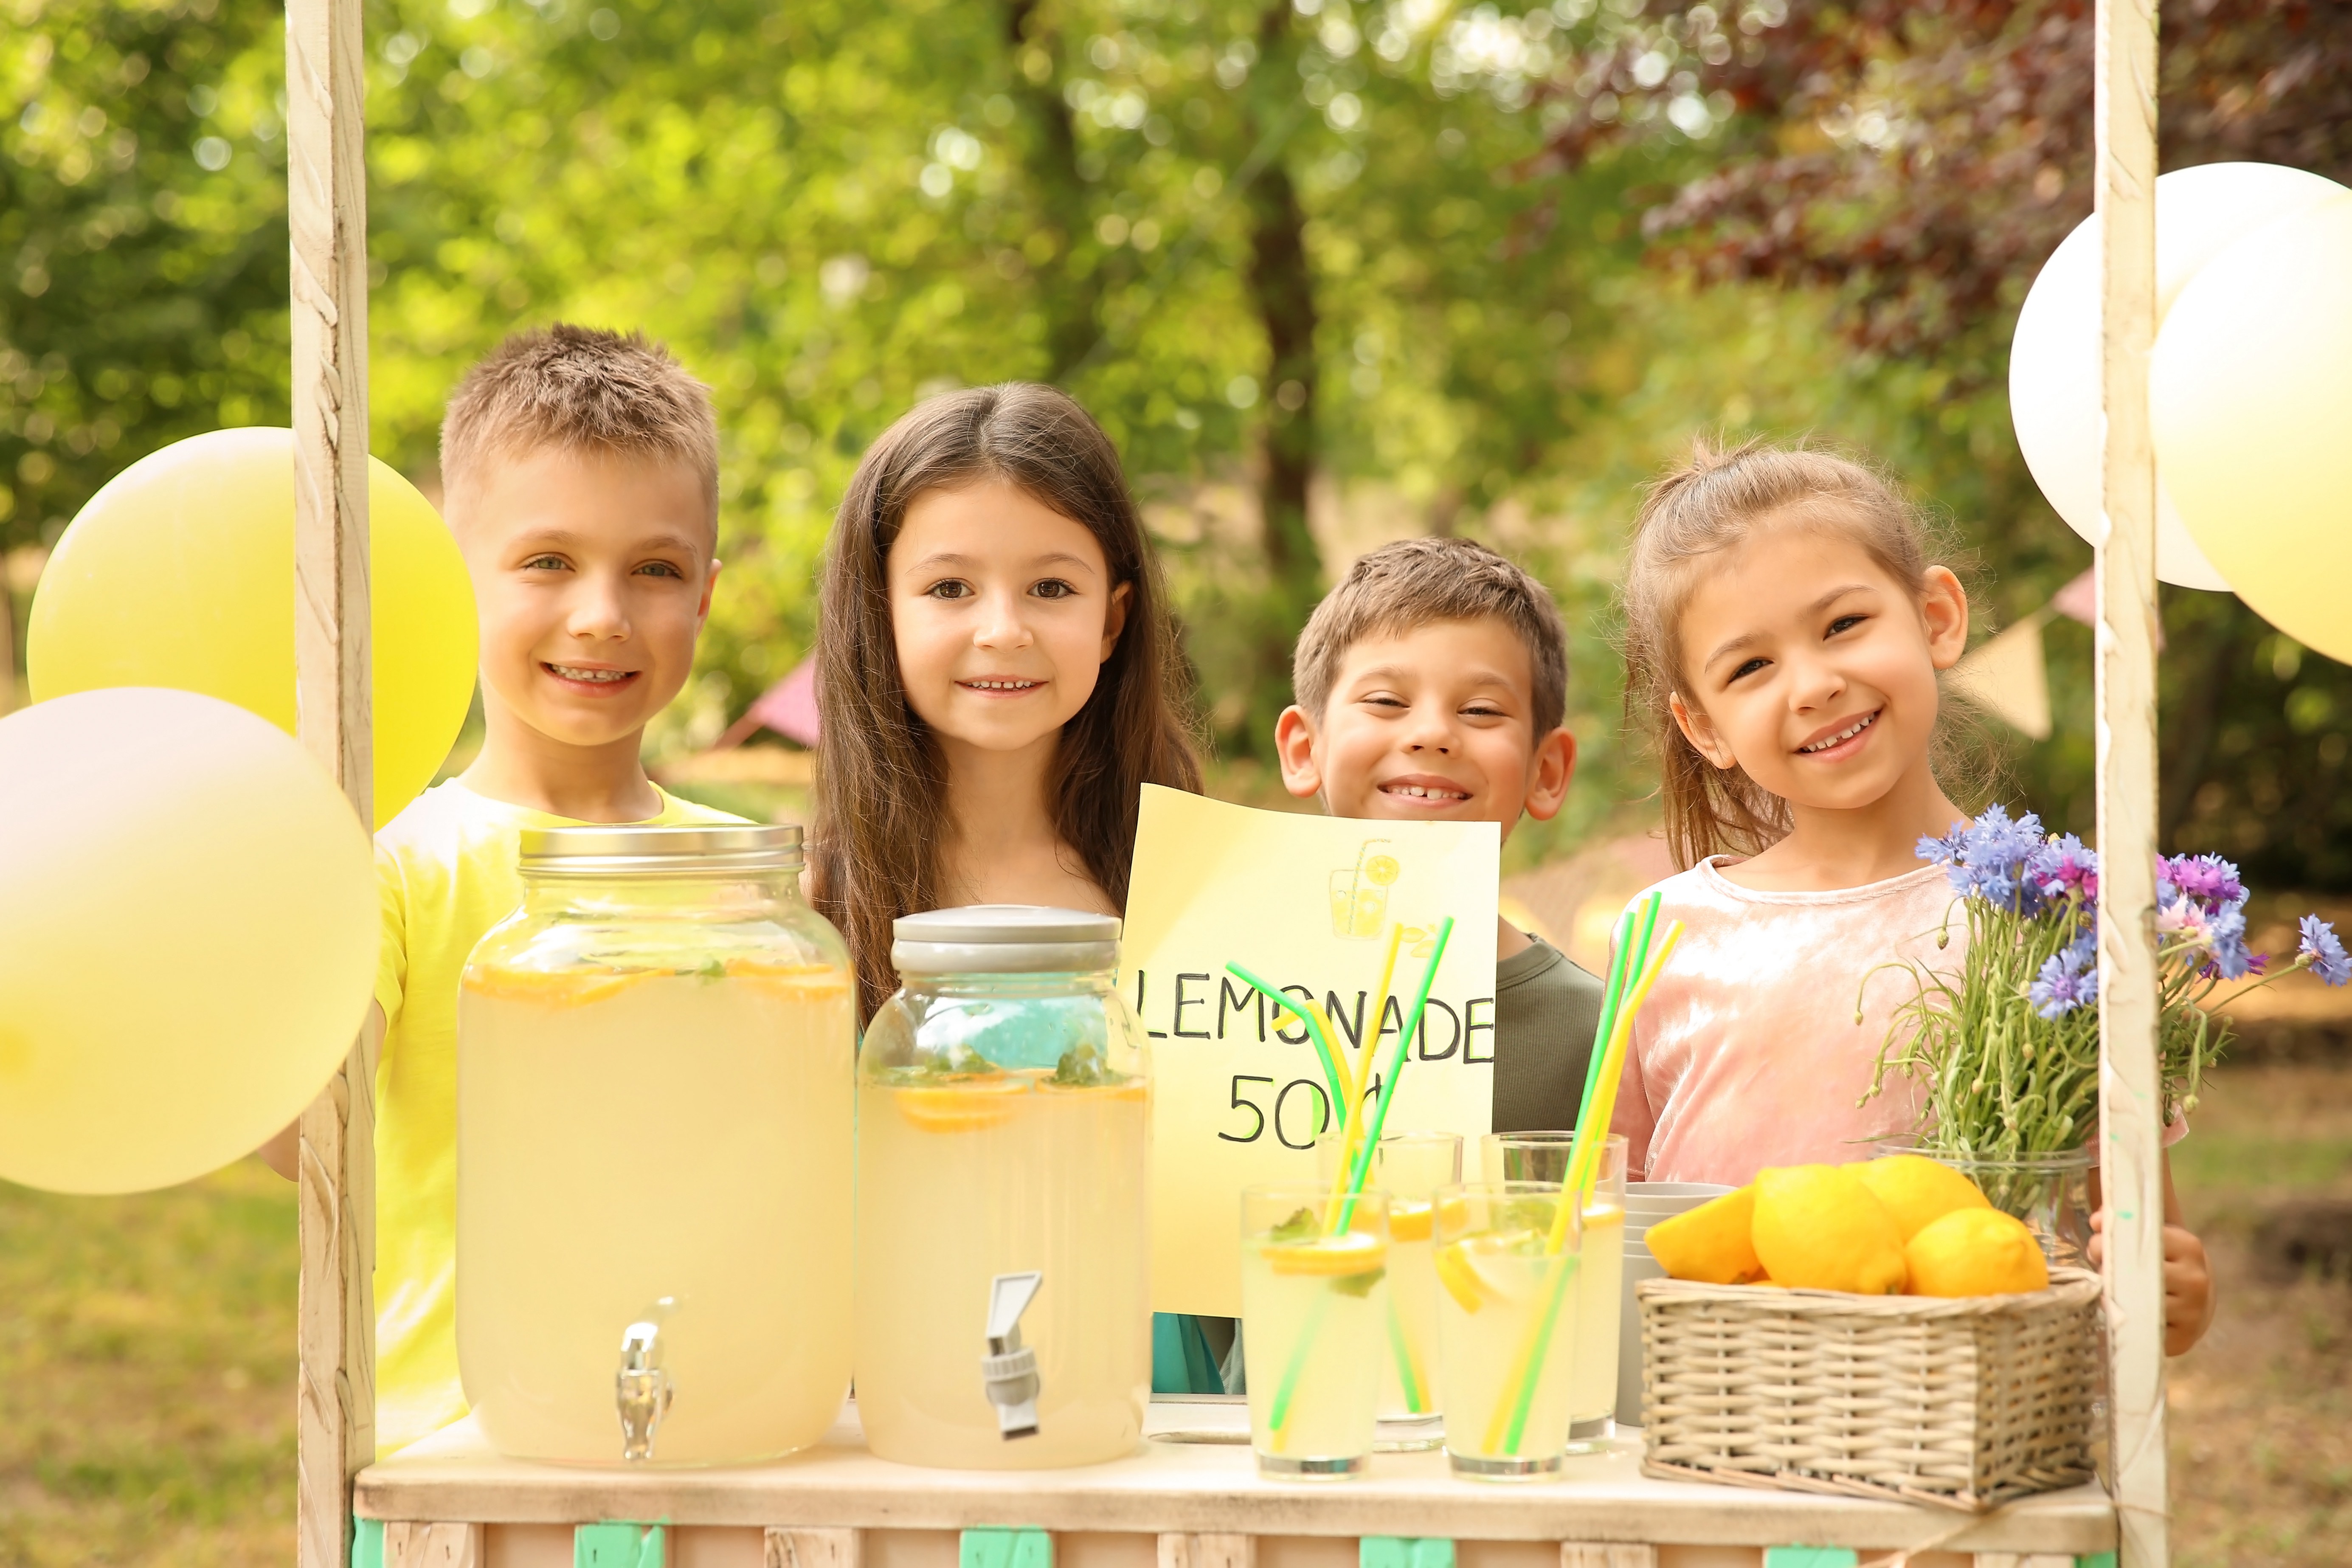 Business Ideas for Kids – Lemonade Stand